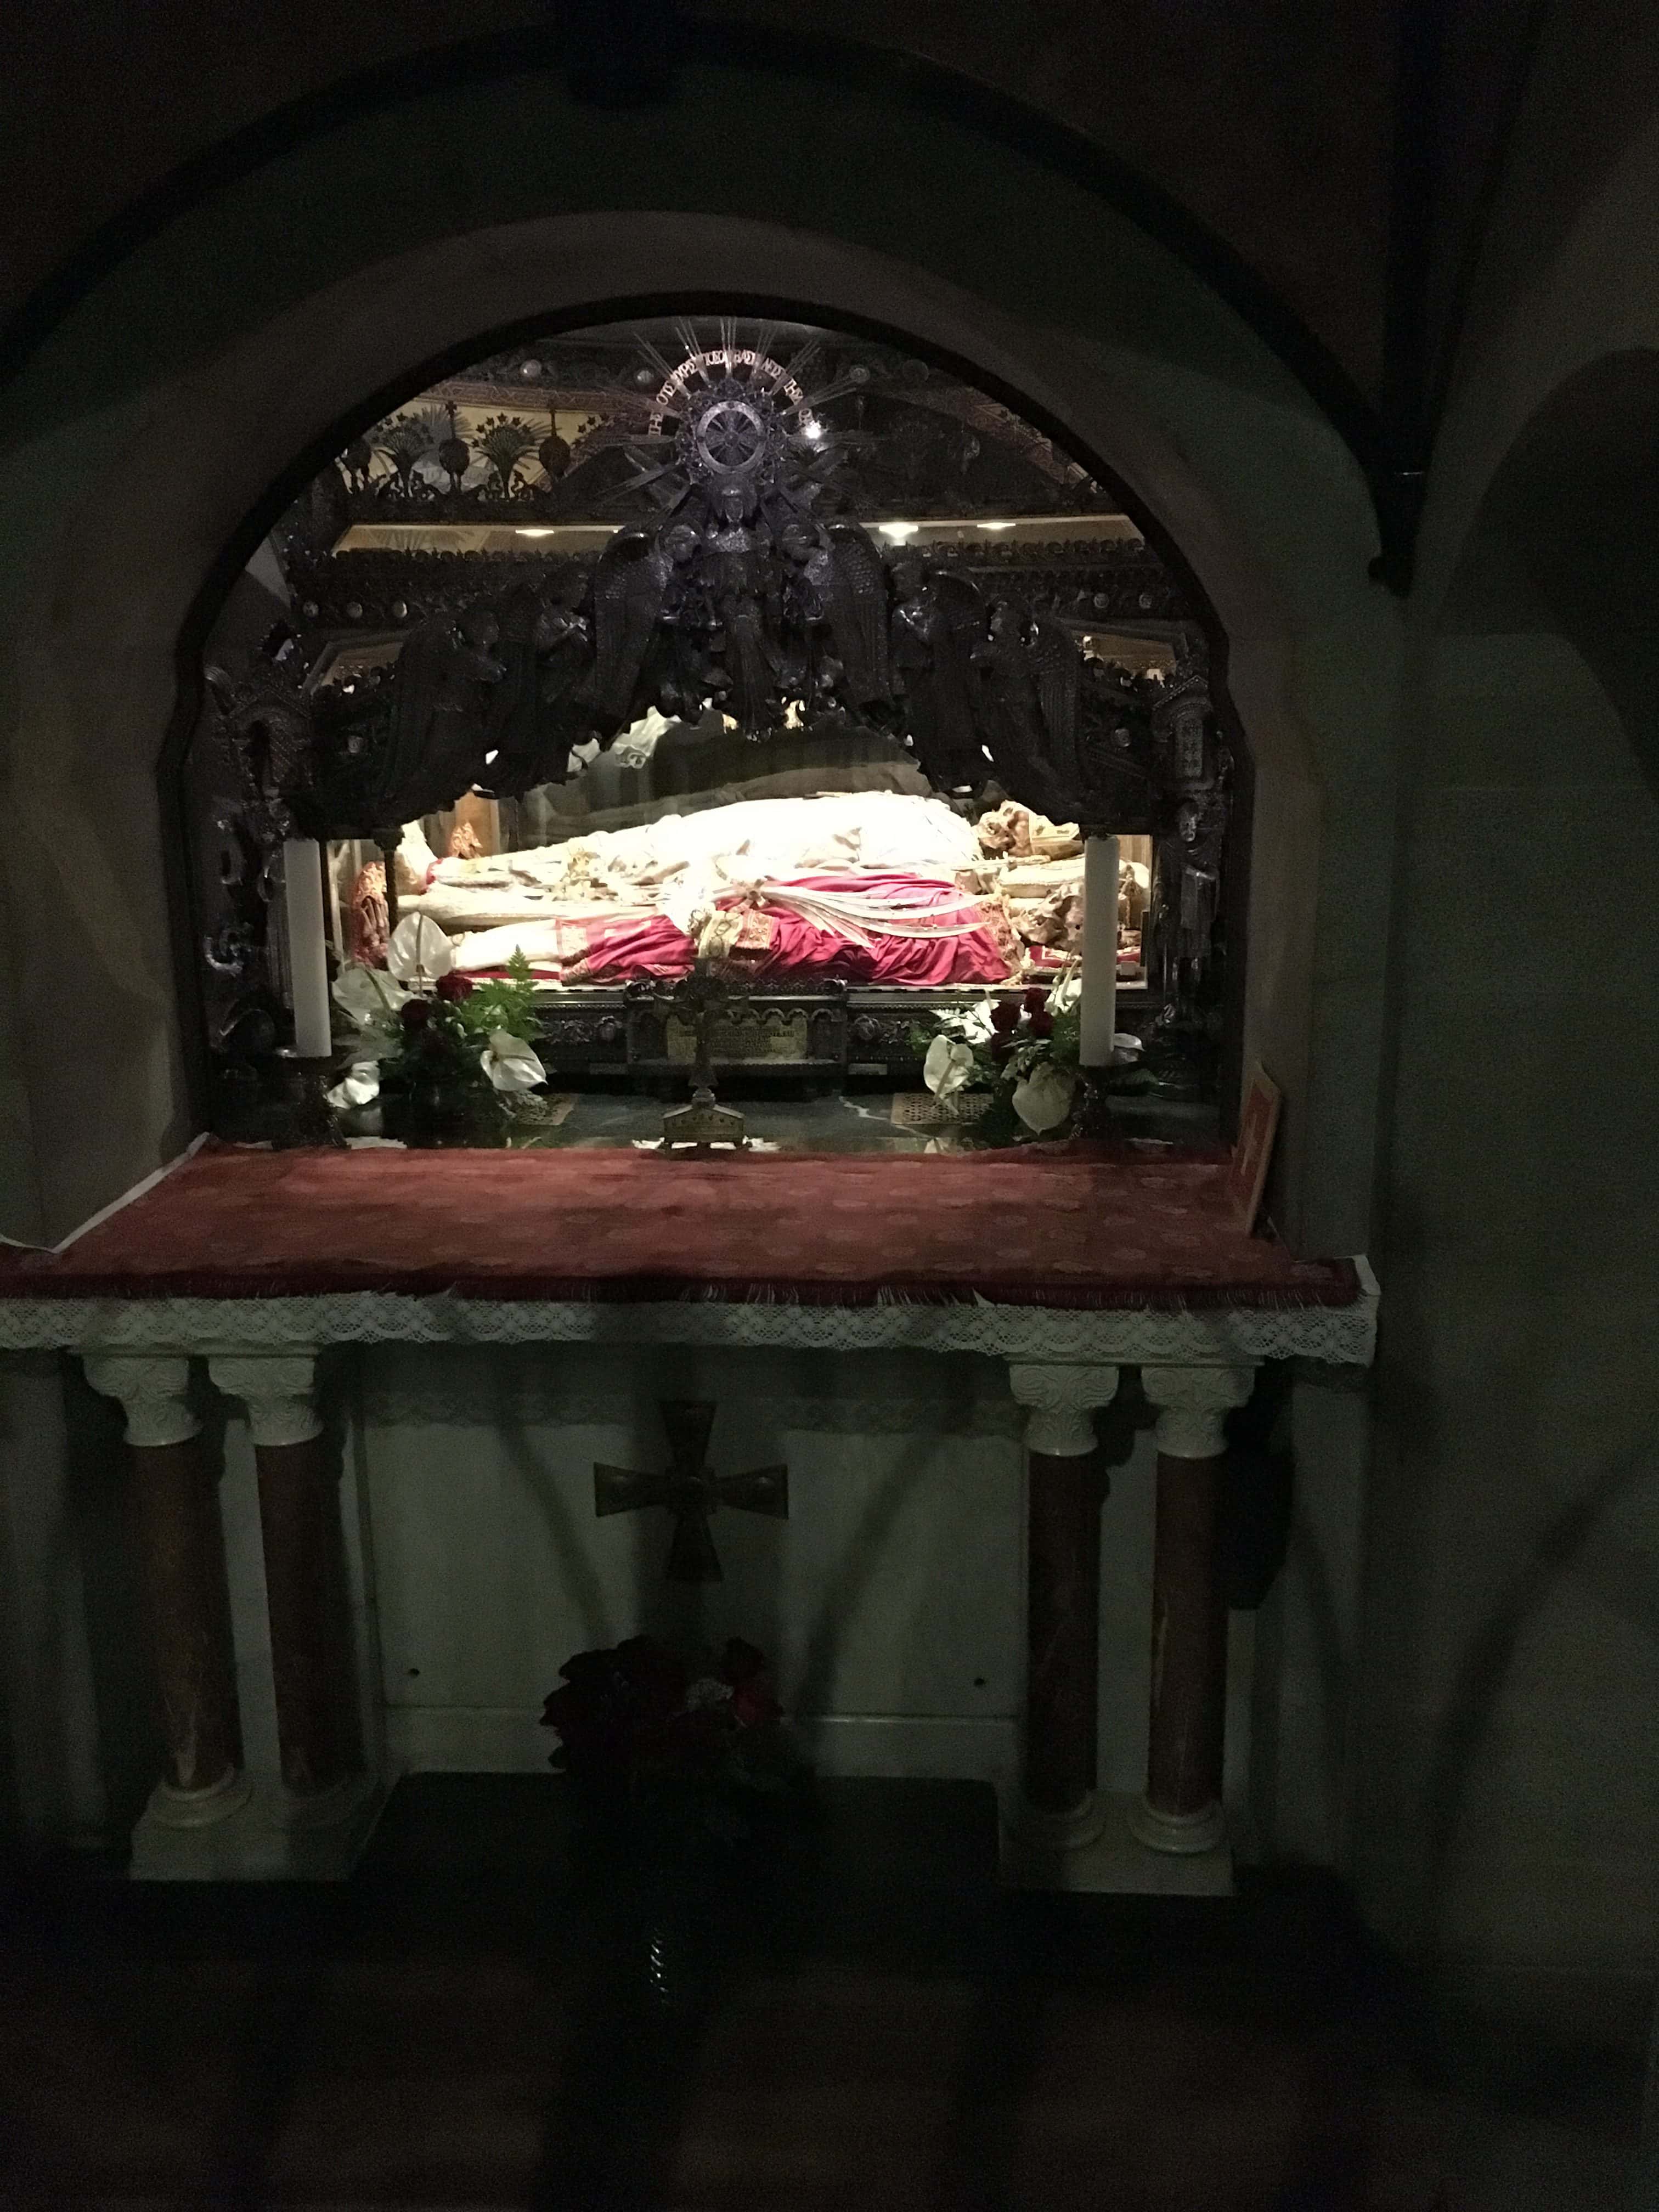 Remains of Saint Ambrose at the Basilica of Saint Ambrose in Milan, Italy